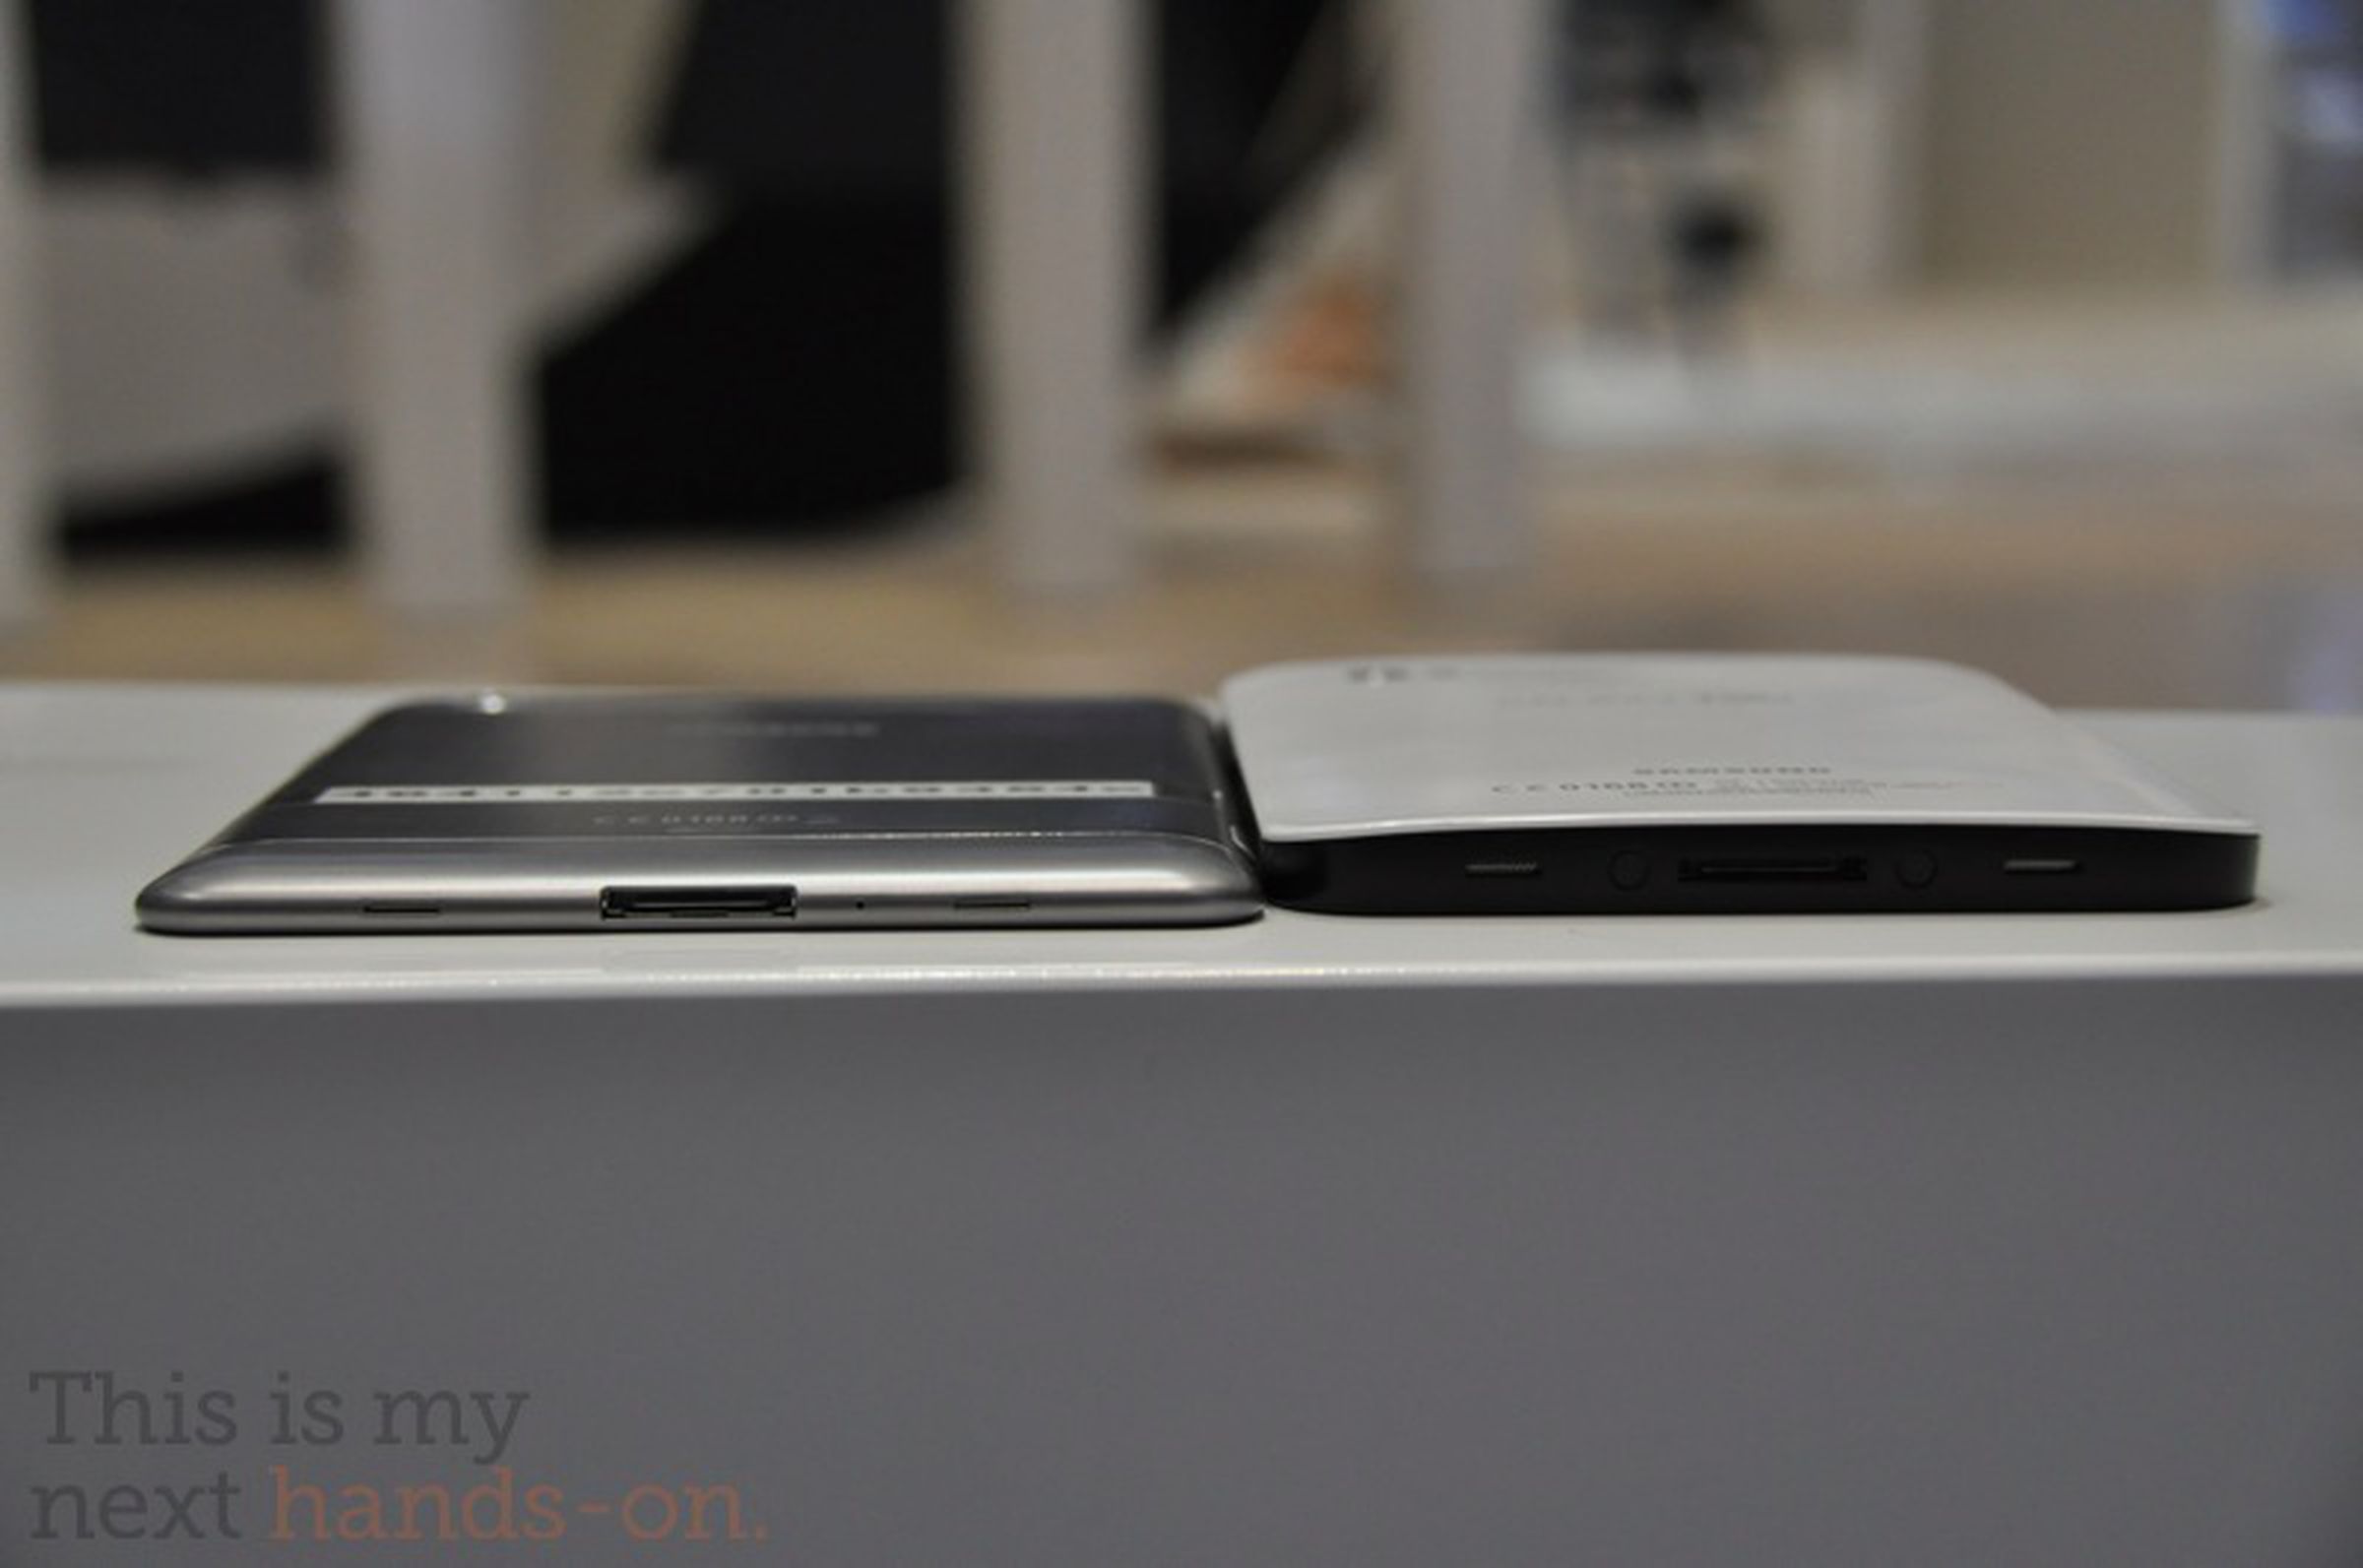 Samsung Galaxy Tab 7.7 hands-on photos